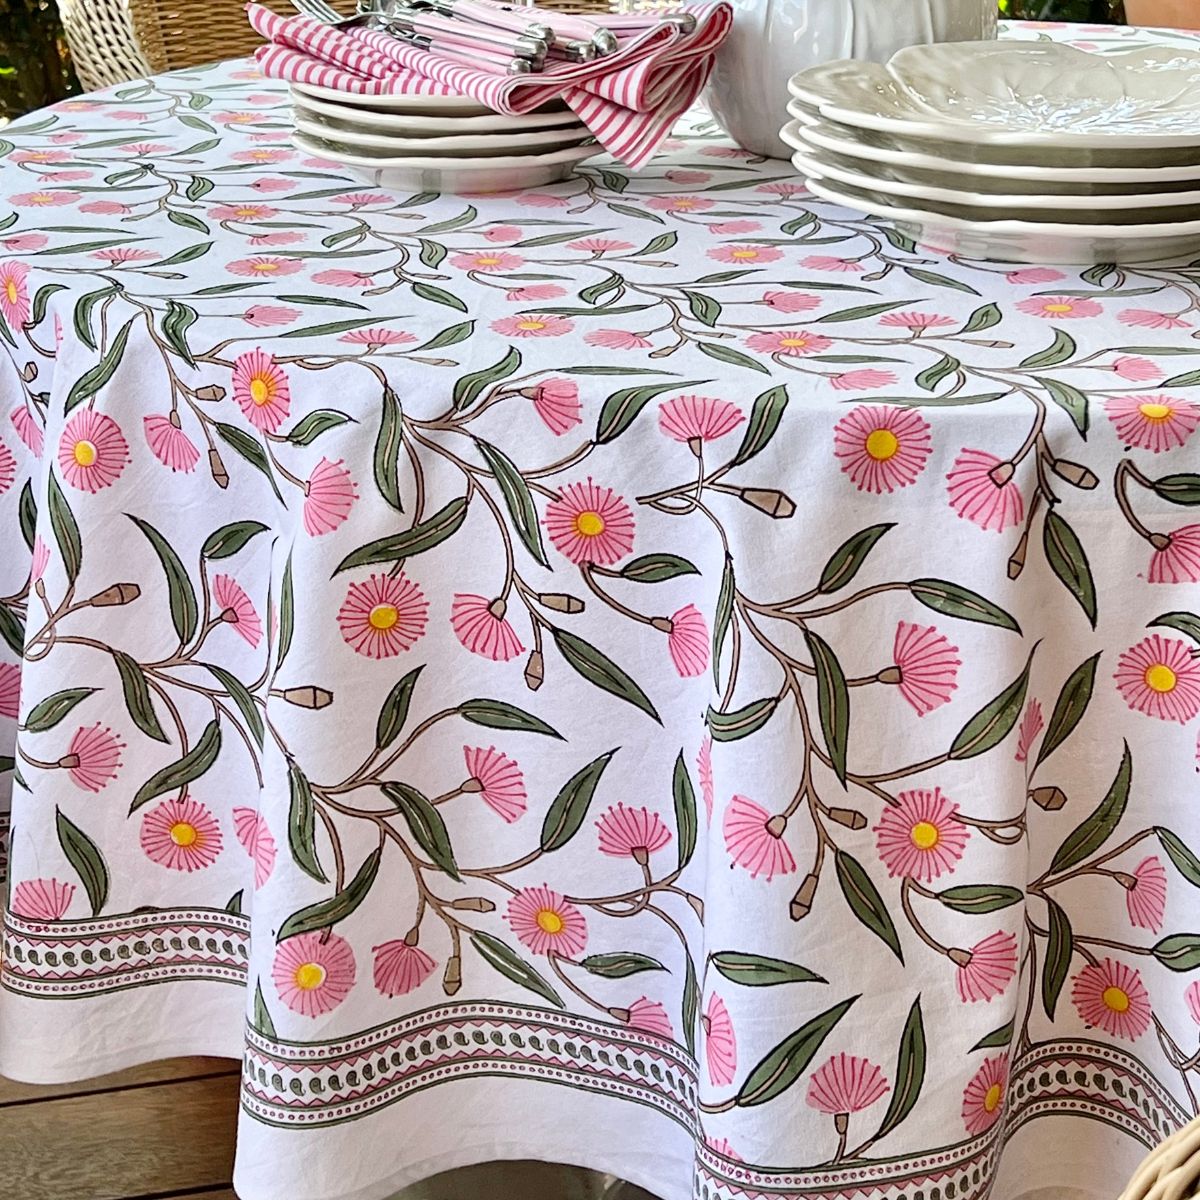 Sample Pink Flowering gums round tablecloth 180 cm ©